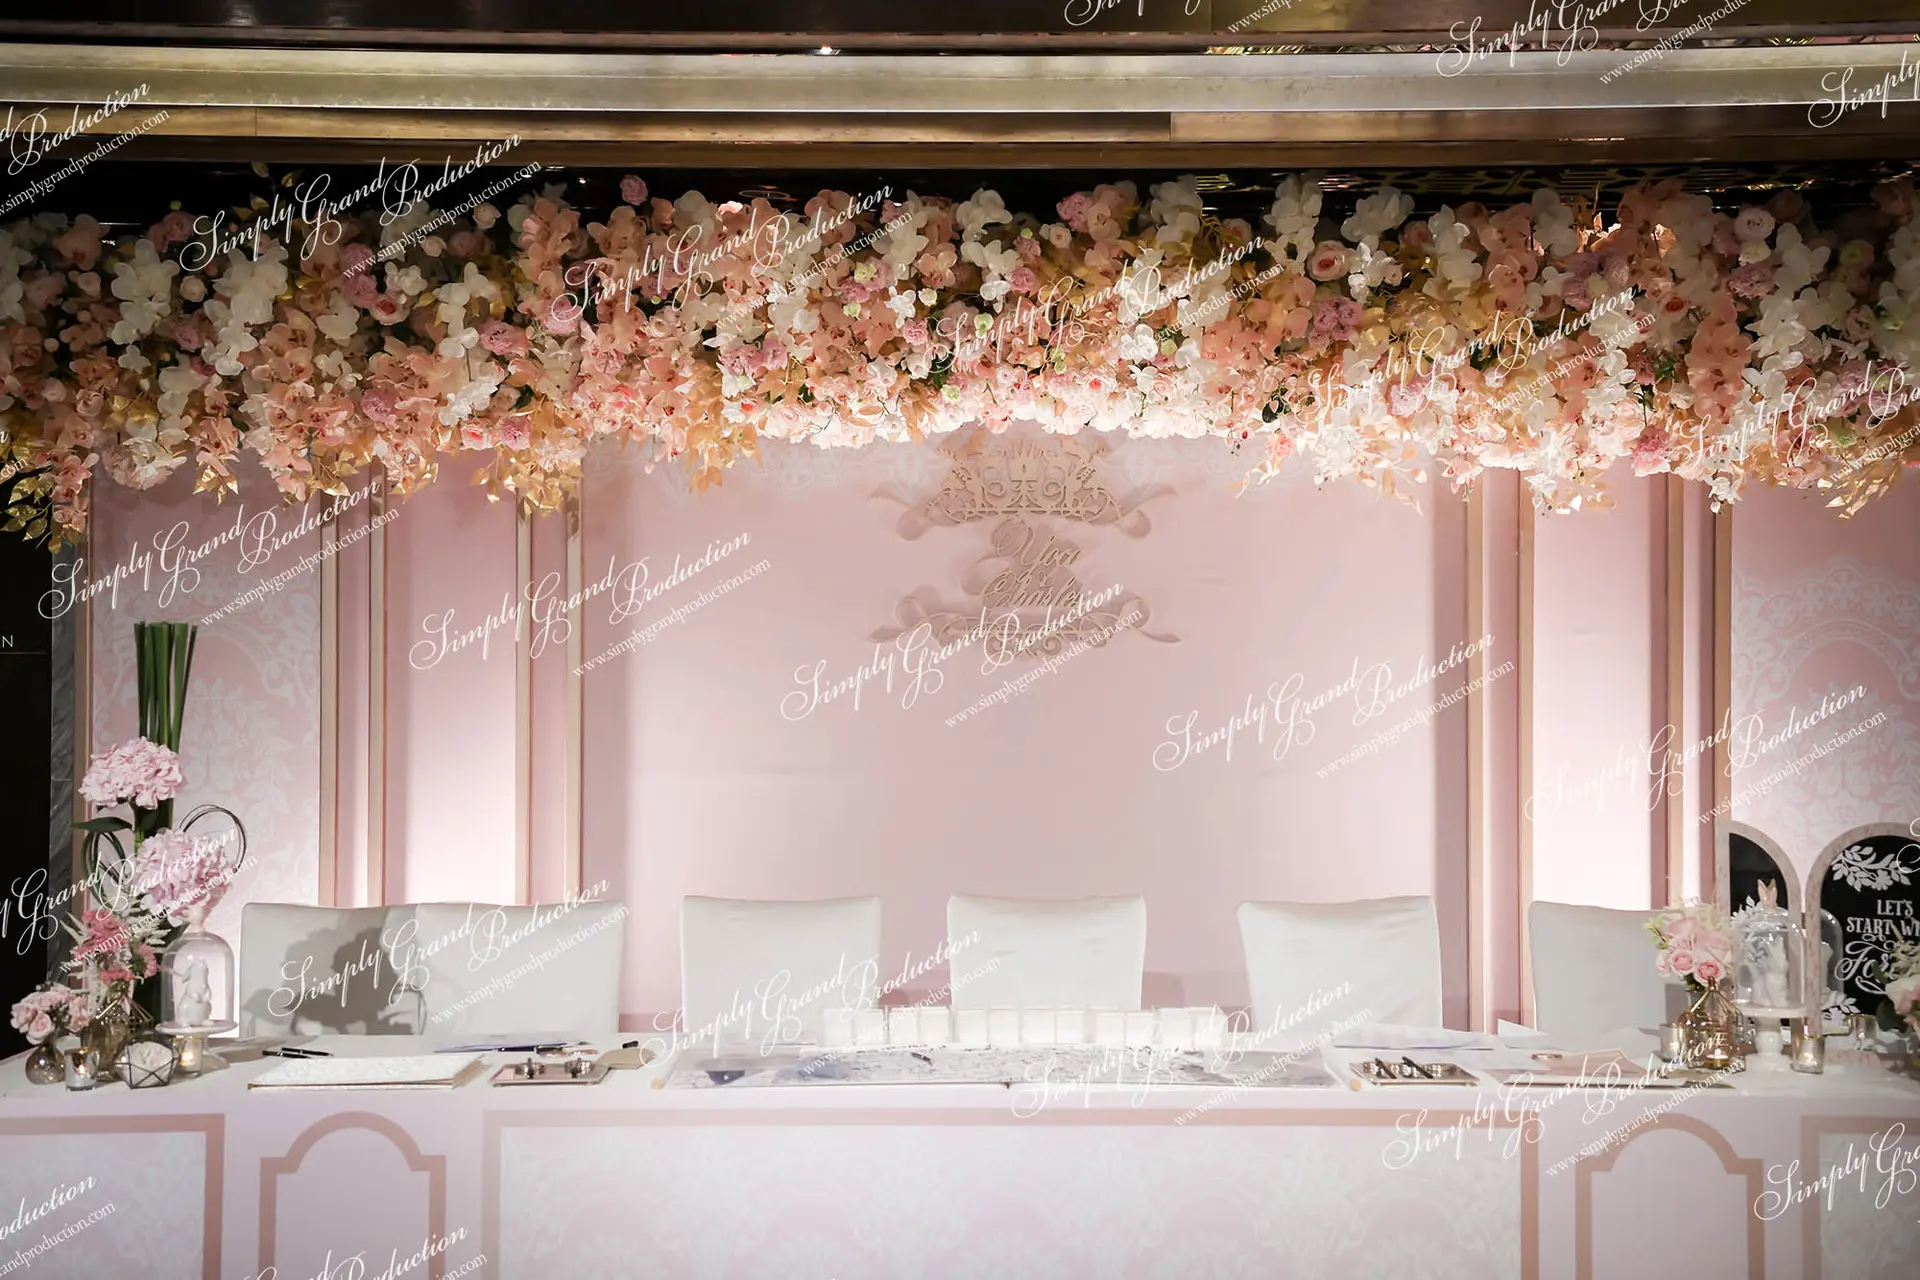 Simply_Grand_Production_Classic_Elegant_wedding_decoration_reception_table_Ritz_Carlton_2_11